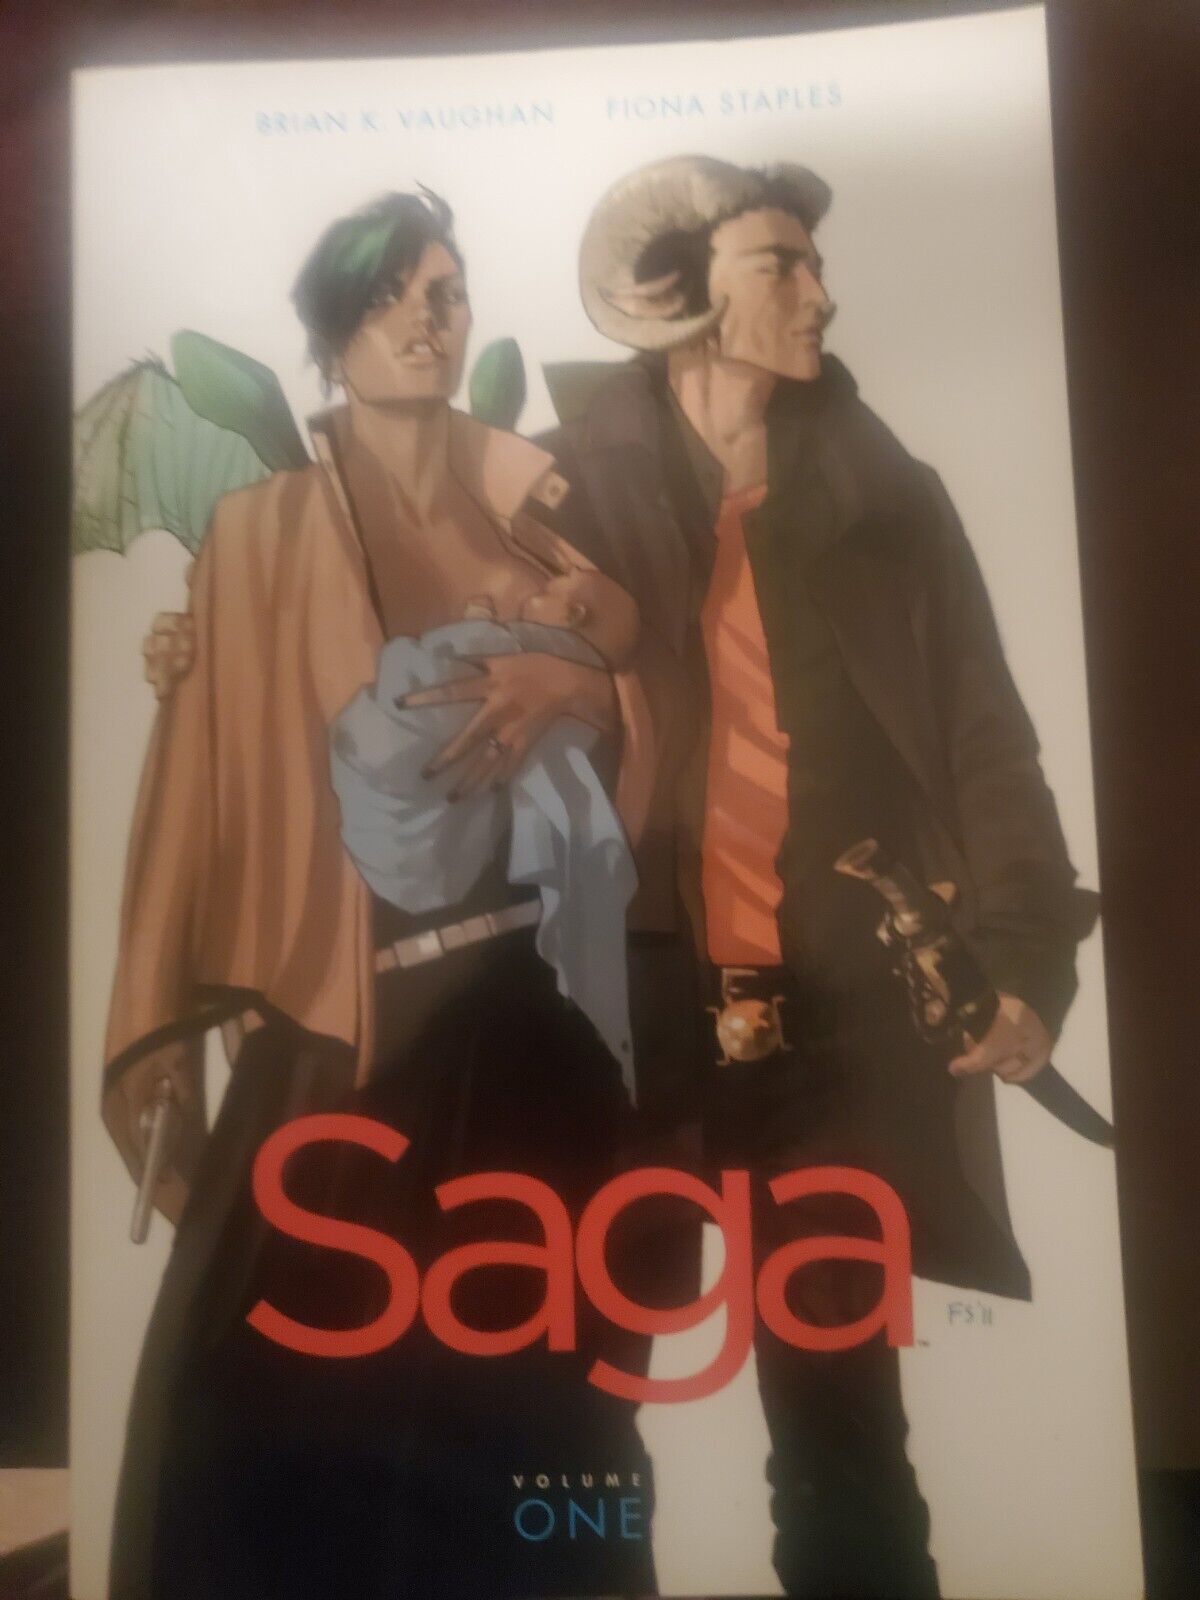 Saga Volume 1 in very good condition 